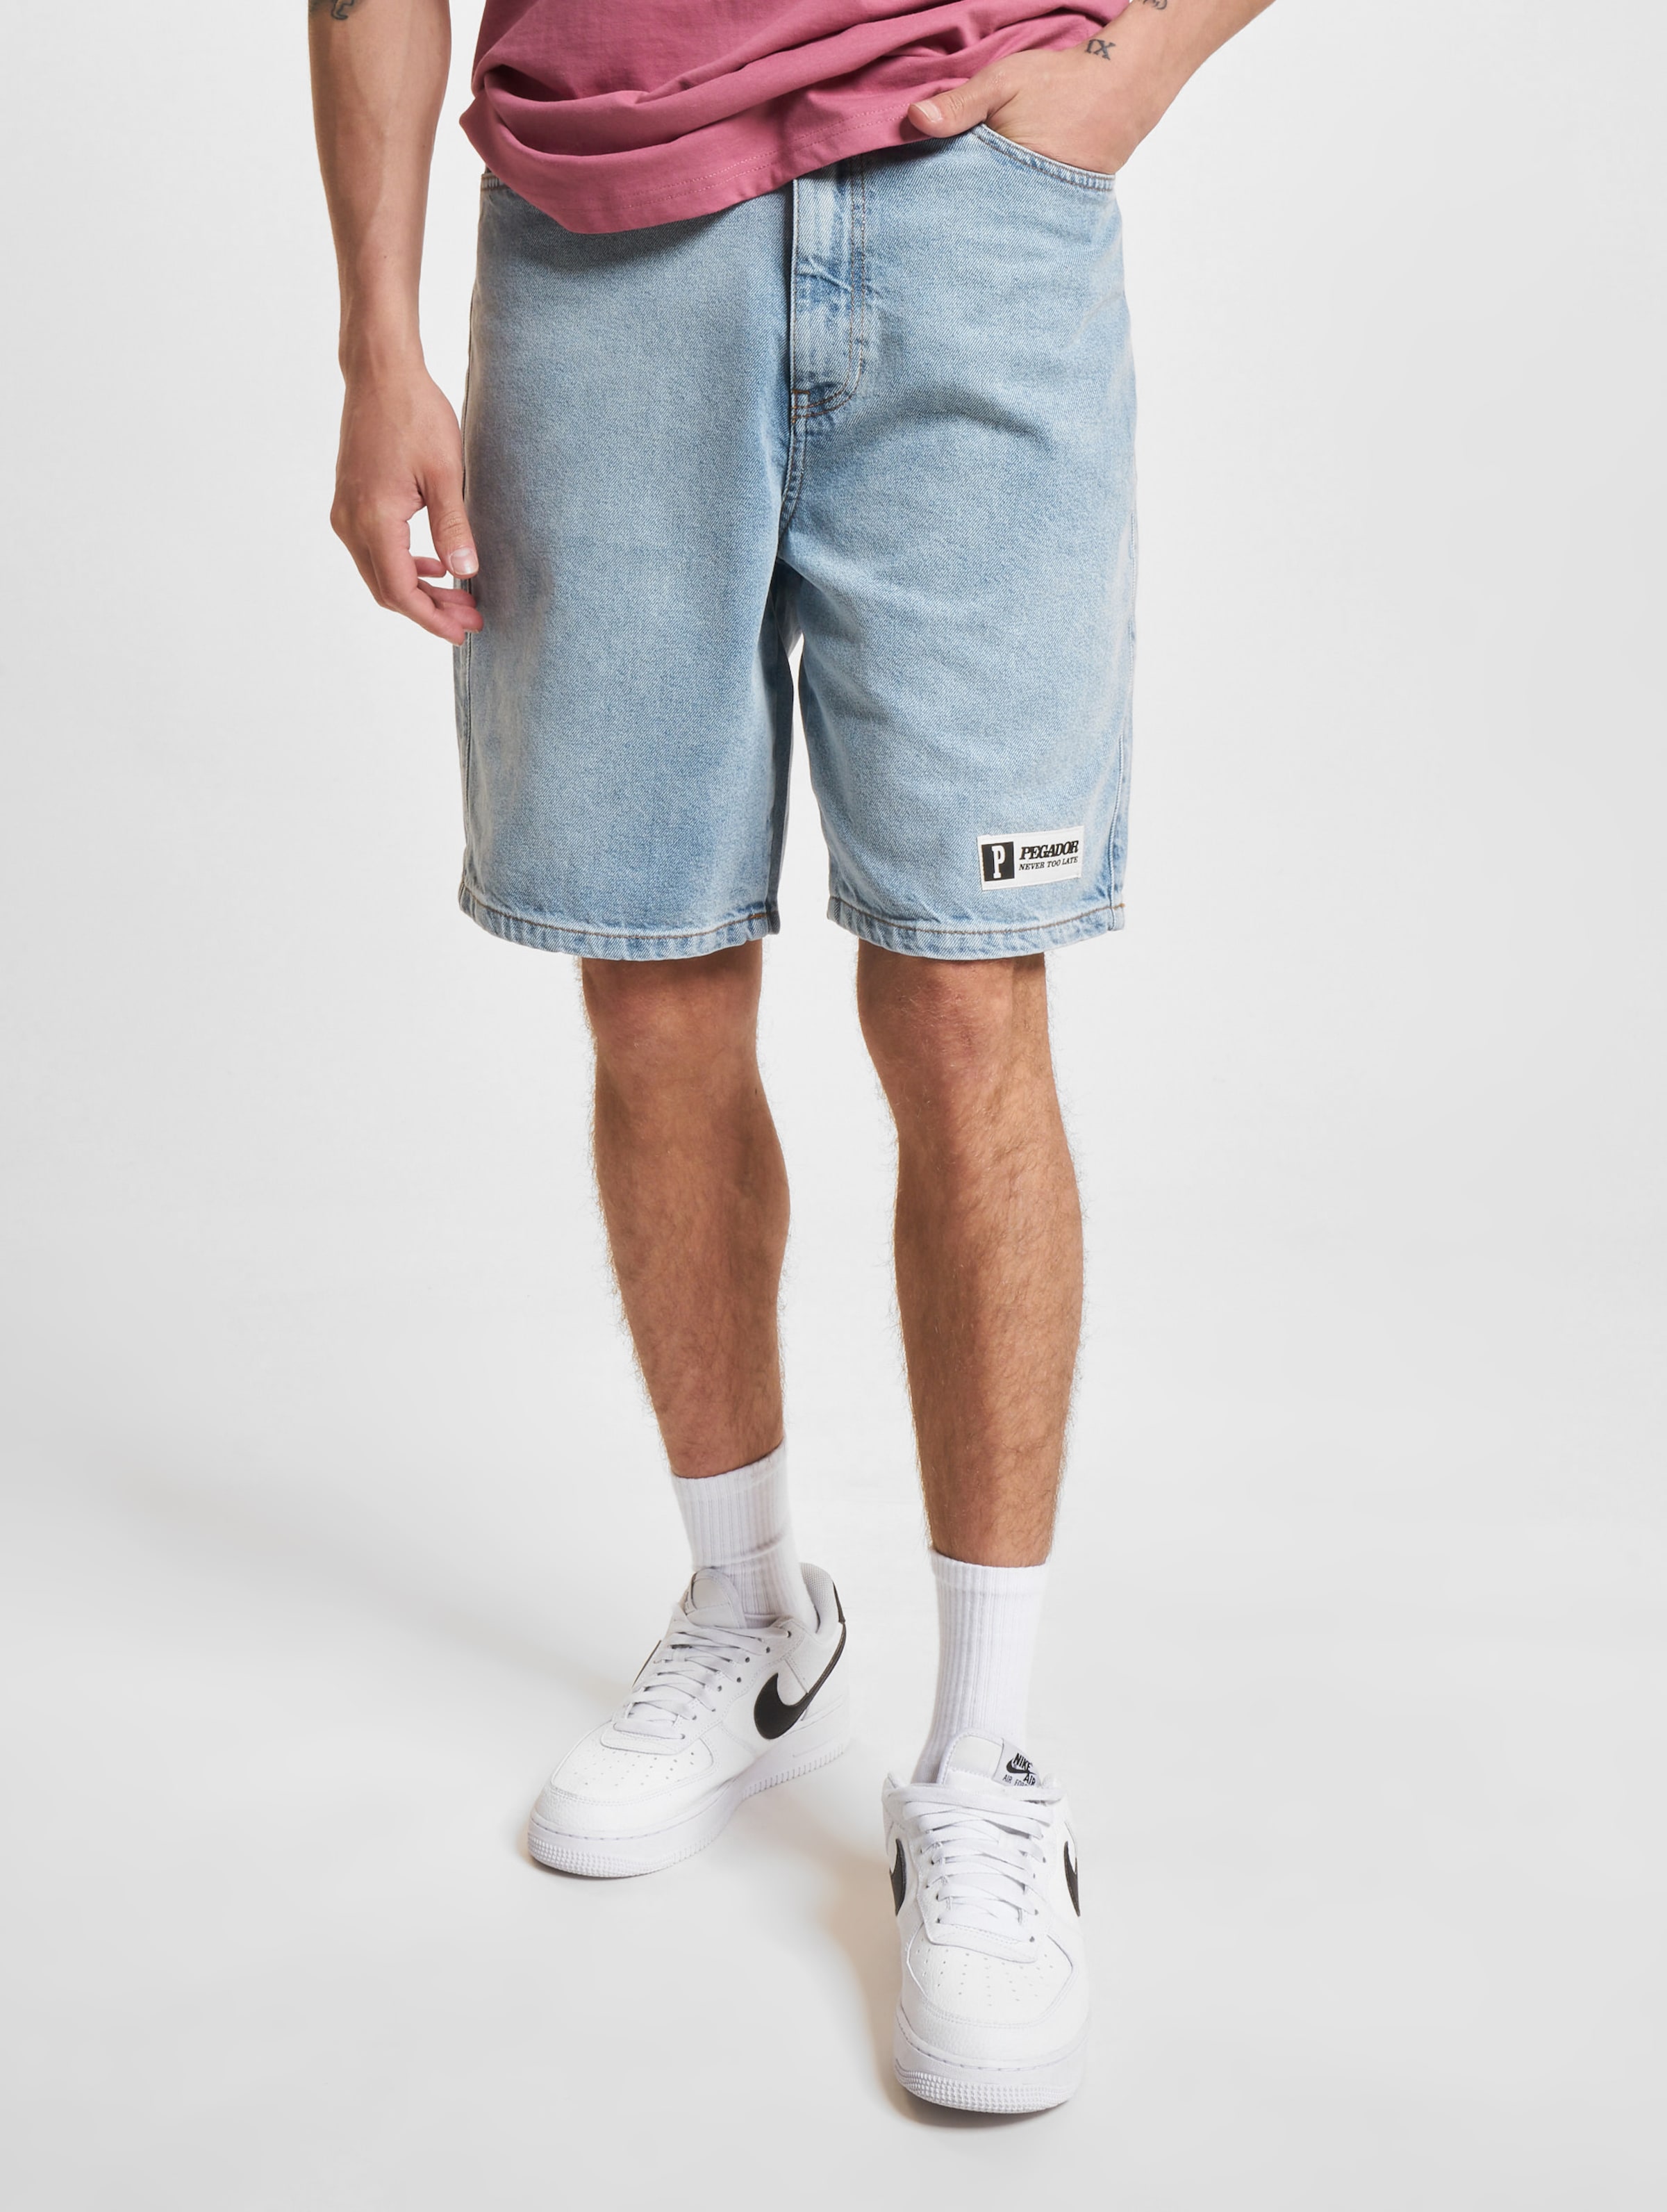 PEGADOR Moores Jeans Shorts Männer,Unisex op kleur blauw, Maat 33